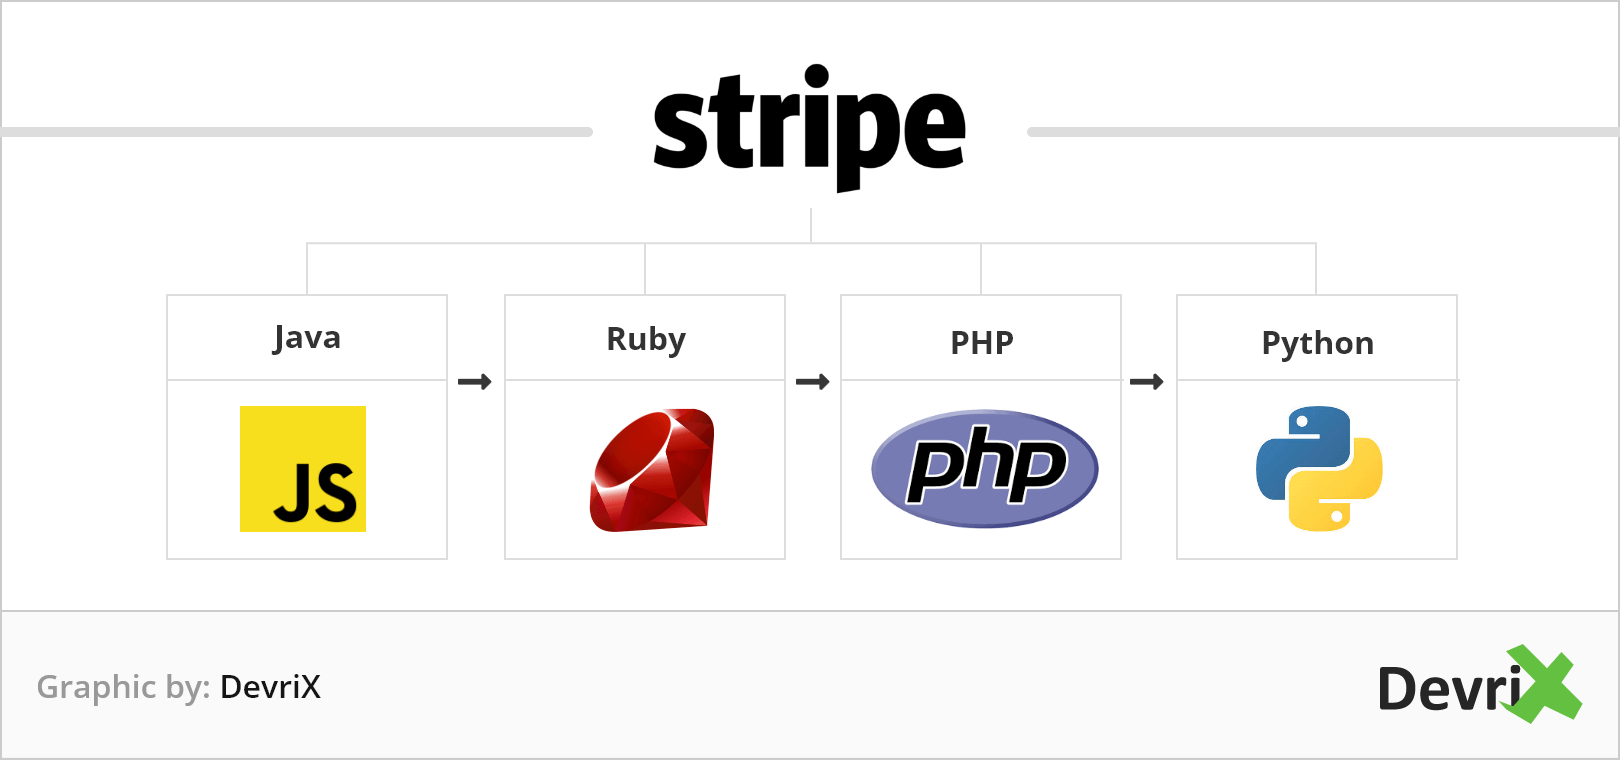 Stripe offers a plethora development languages